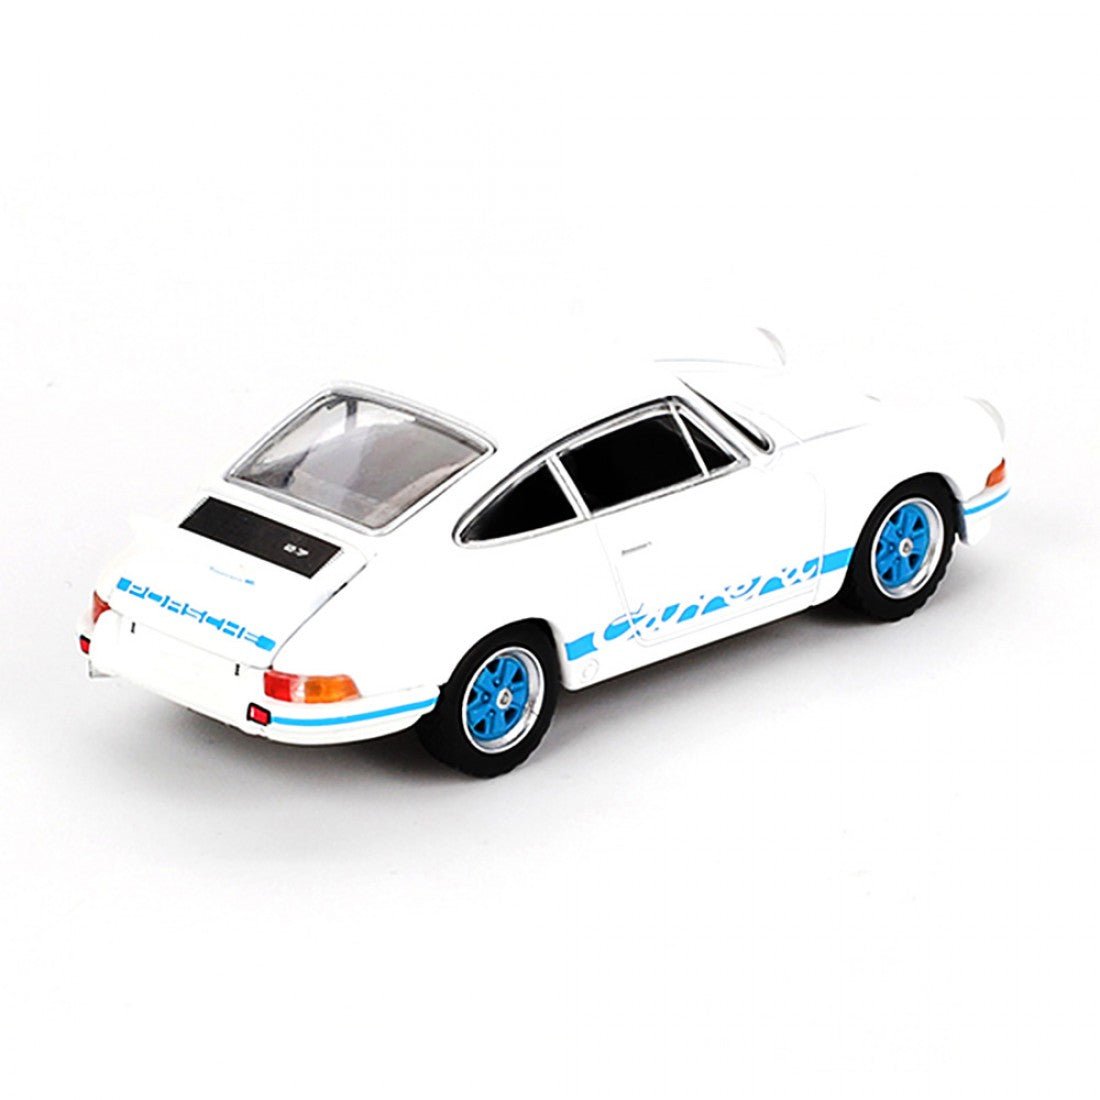 [PREORDER] Mini GT - 1/64 Porsche 911 Carrera RS 2.7 Grand Prix White with Blue Livery LHD Diecast Scale Model Car - MGT00715-L - MODEL CARS UKMODEL CAR#INNO64##TARMAC##diecast_model#